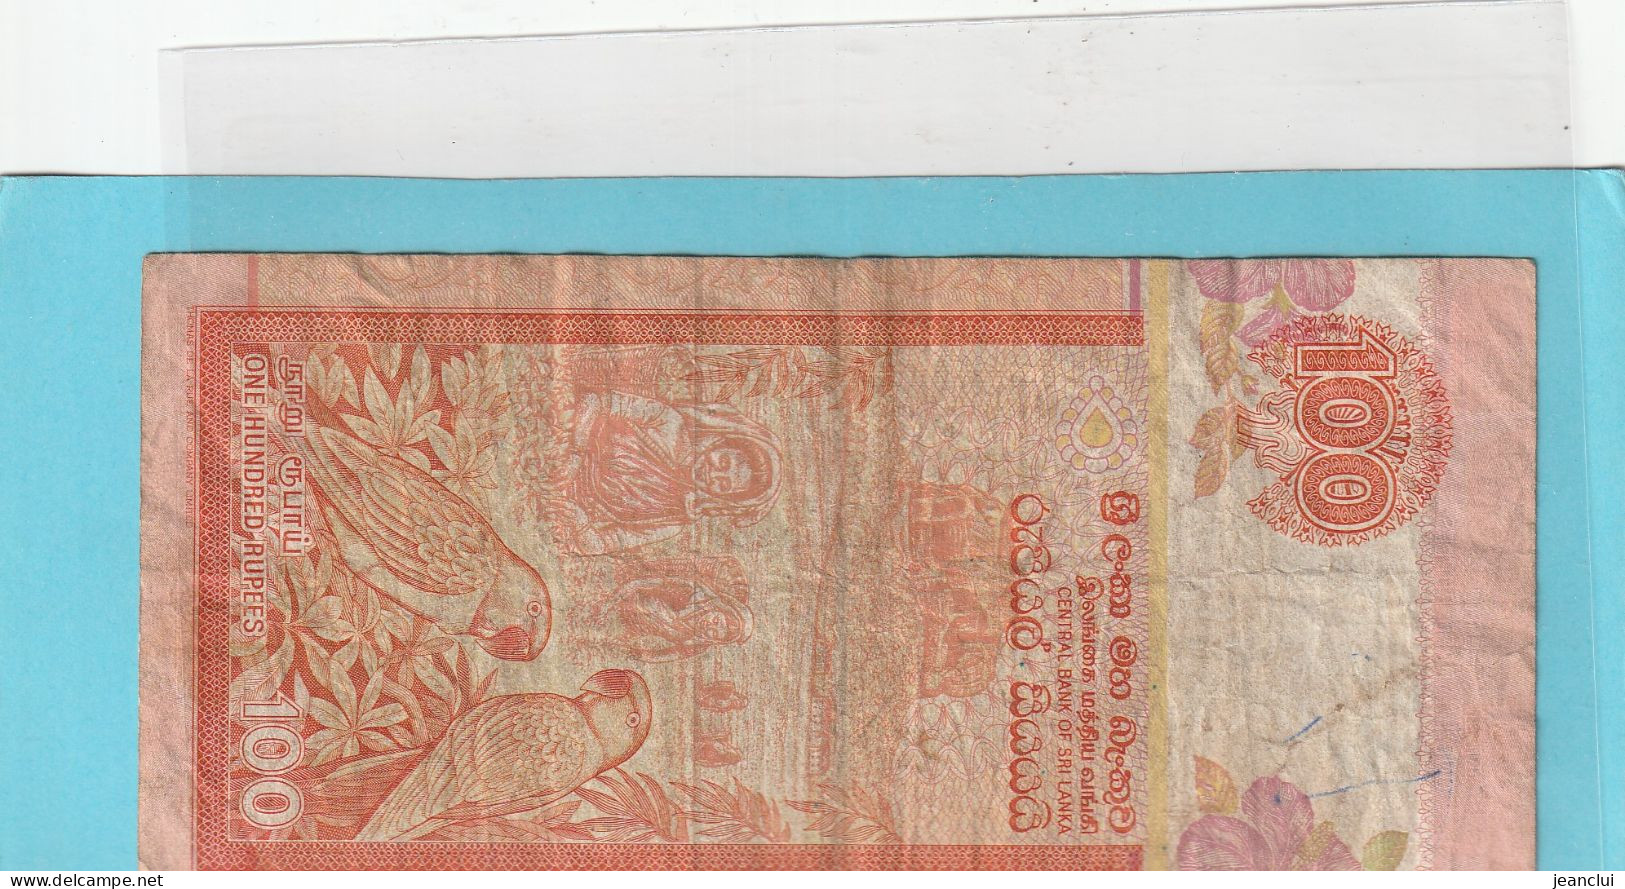 CENTRAL BANK OF SRI LANKA   .  100 RUPEES  .  01-07-1992  .  N°   J/112 627490 .  2 SCANNES  .  BILLET TRES USITE - Sri Lanka